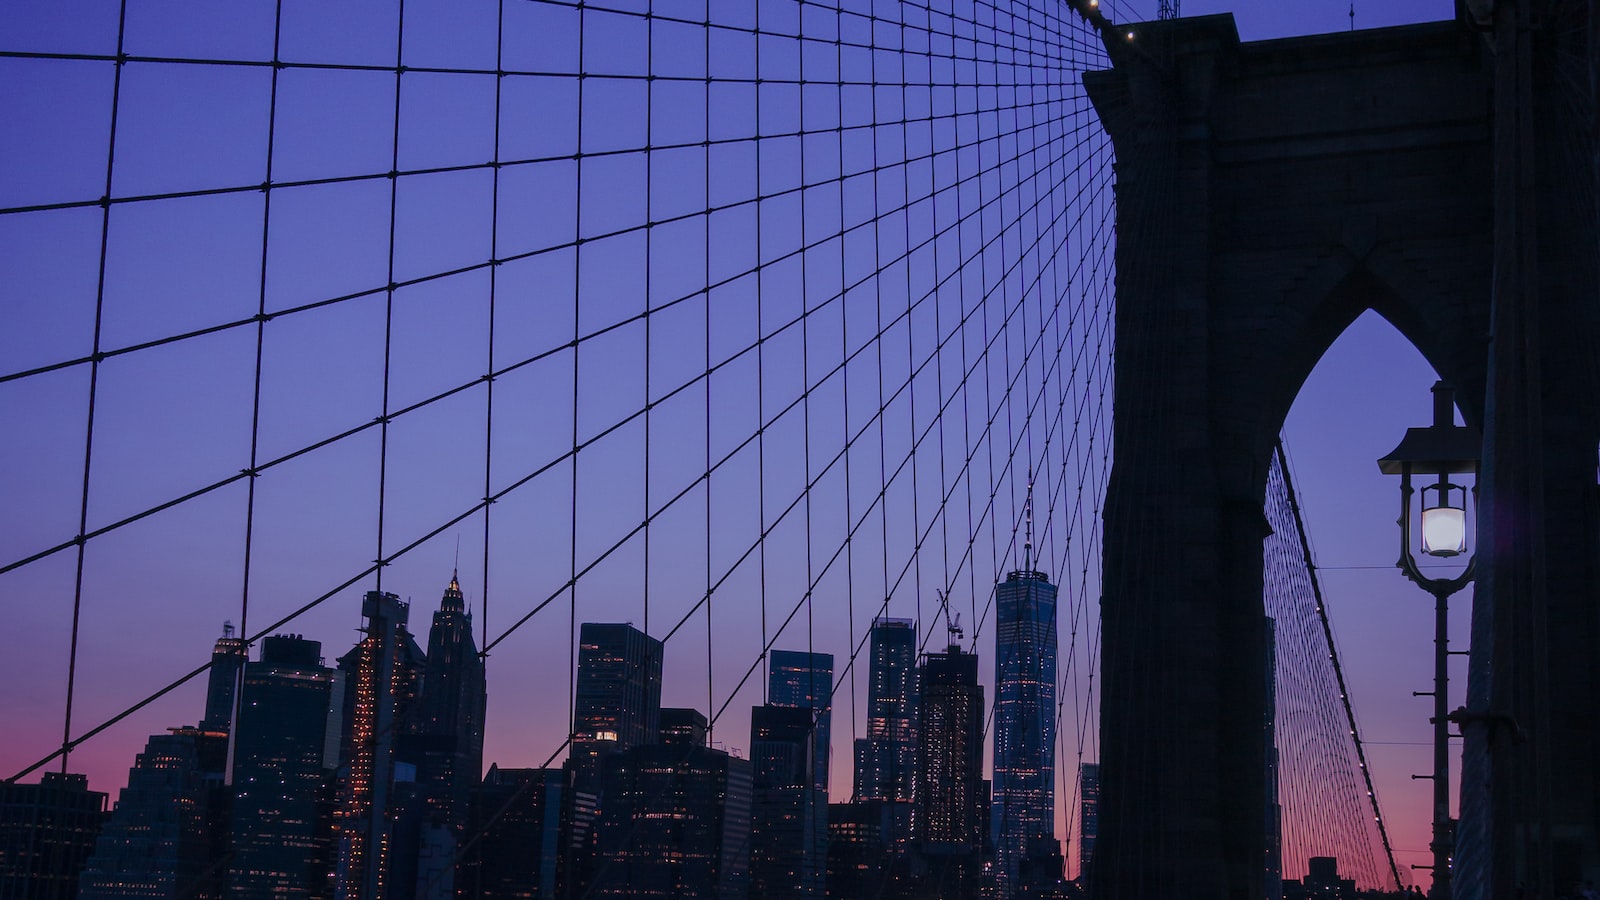 Brooklyn Bridge Quotes For Instagram Captions